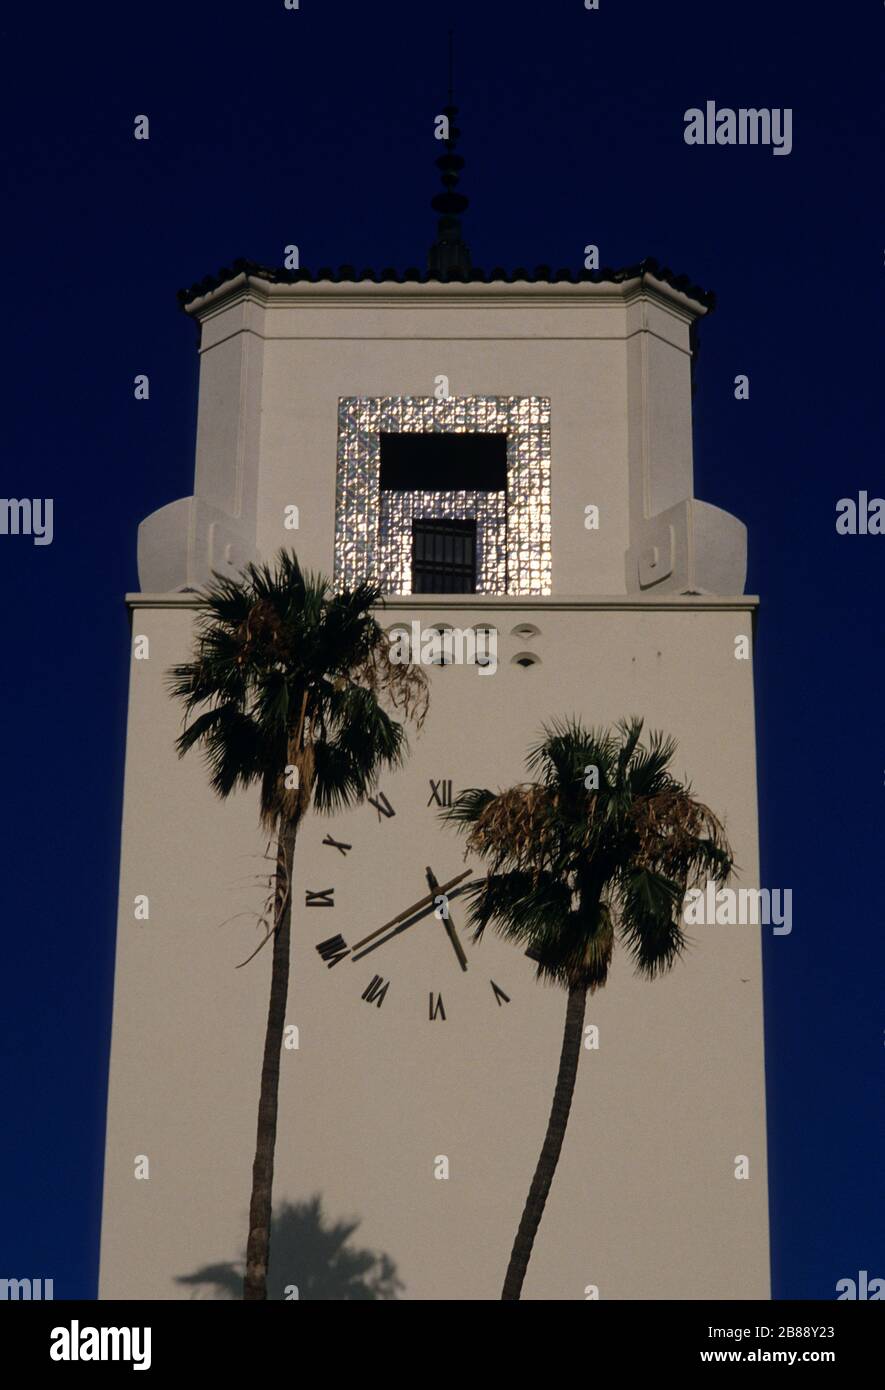 Union Station building, LAUS, Los Angeles, LA, California, USA Stock Photo